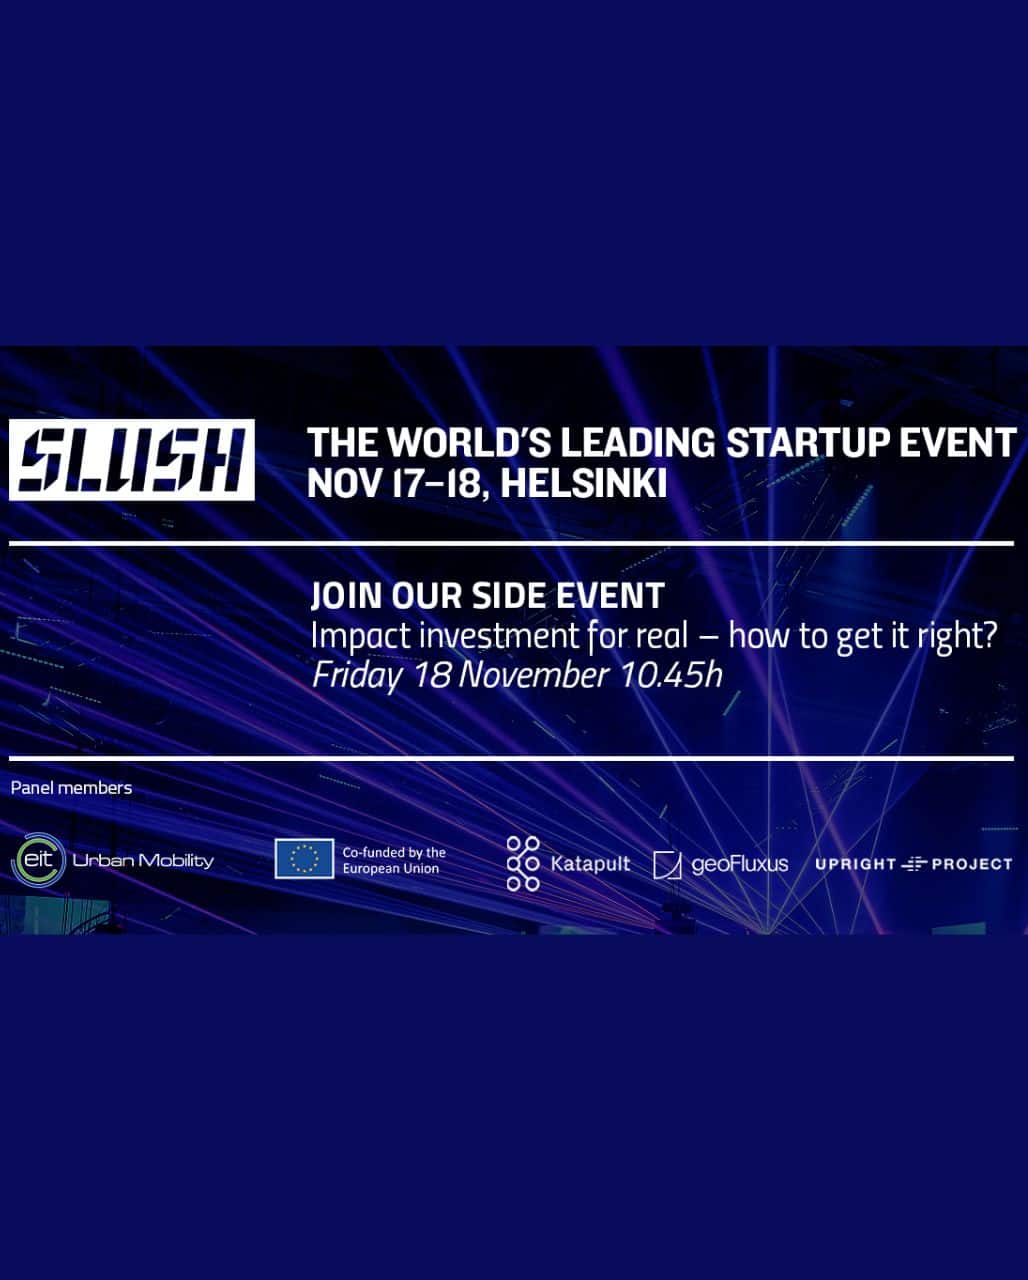 Slush side event